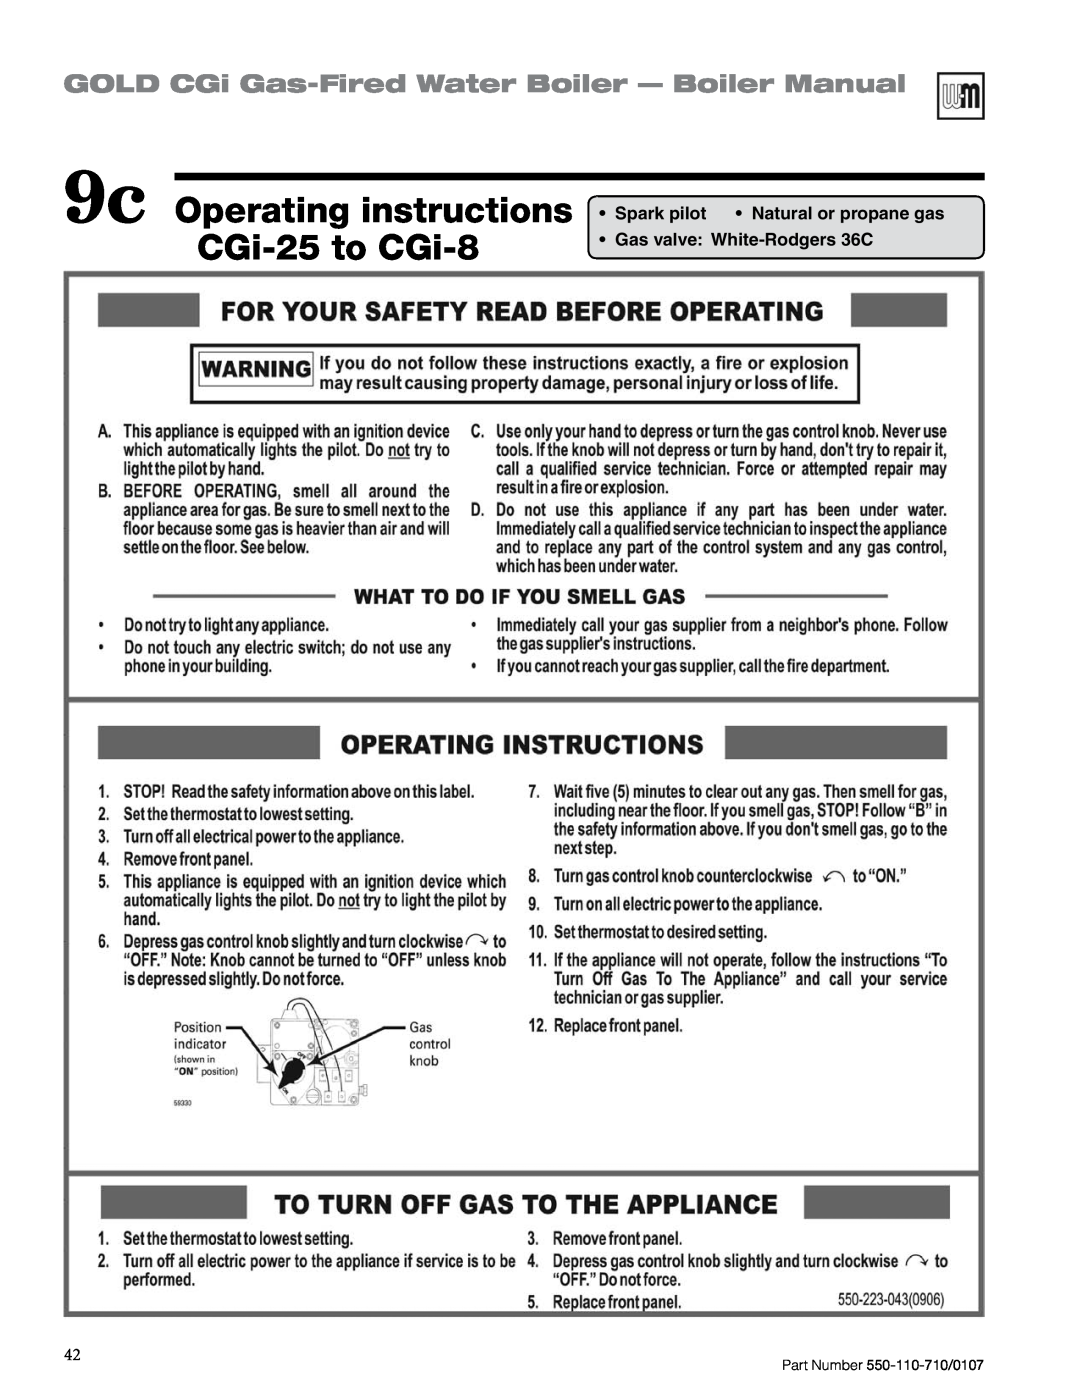 Weil-McLain Series 2 manual 9c Operating instructions CGi-25to CGi-8, GOLD CGi Gas-FiredWater Boiler — Boiler Manual 